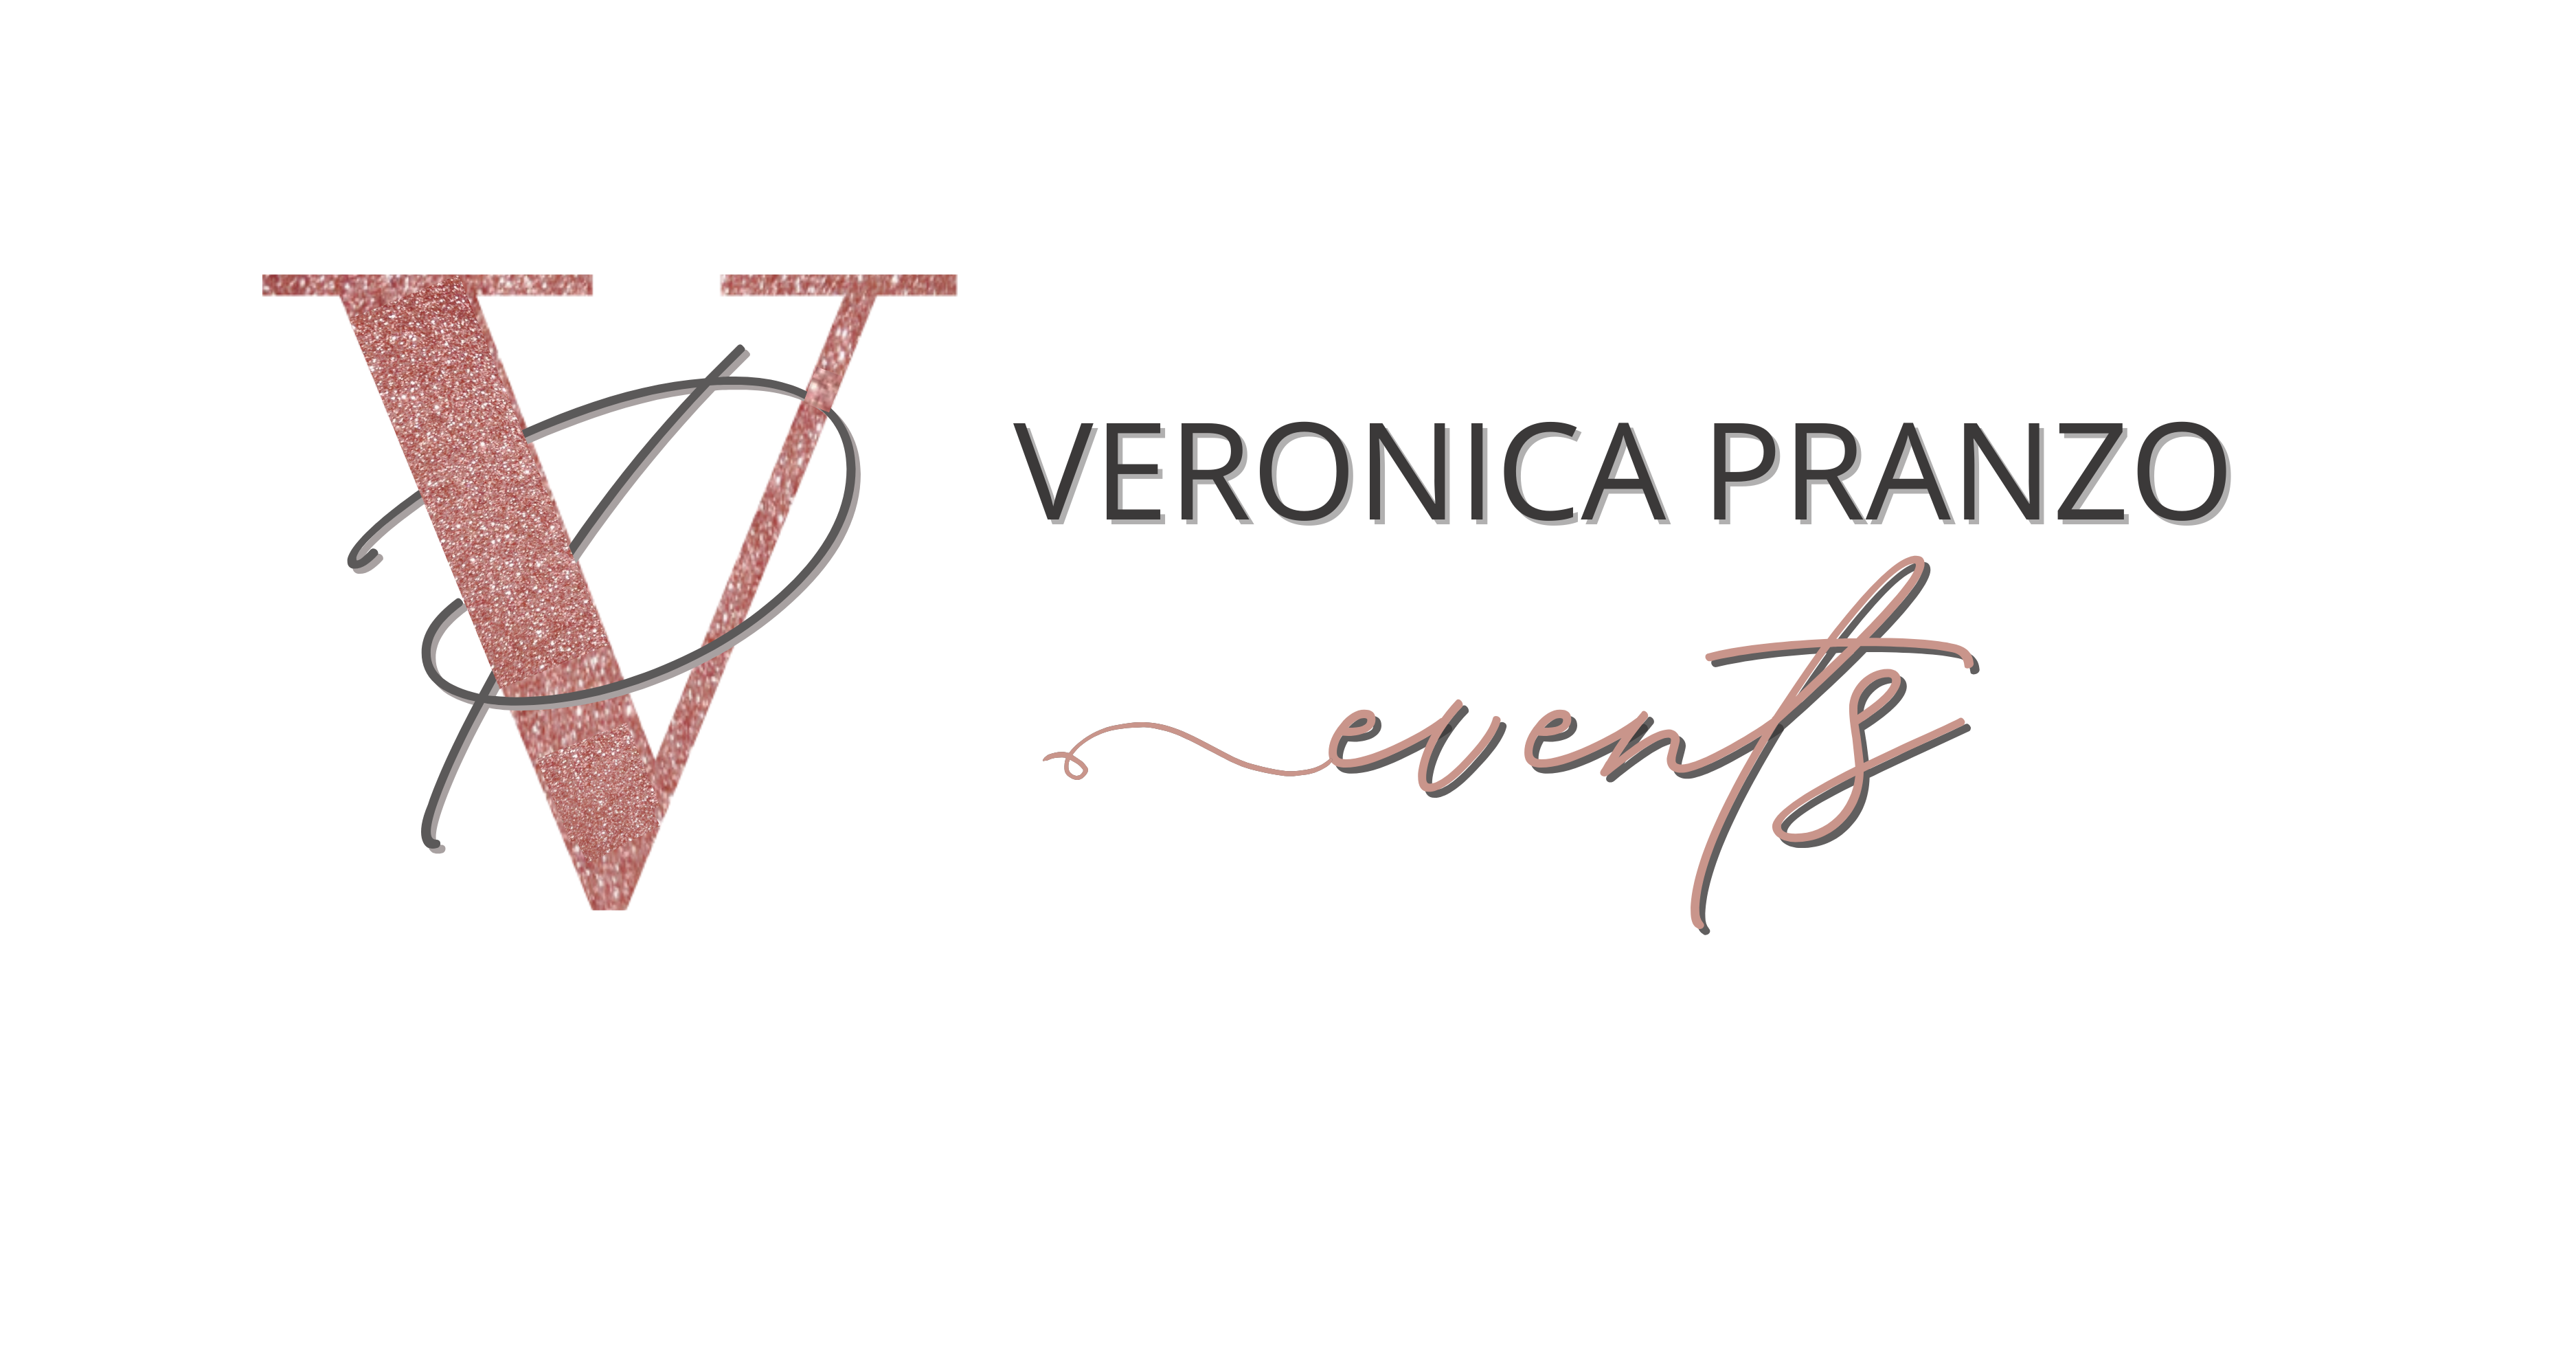 Veronica Pranzo events